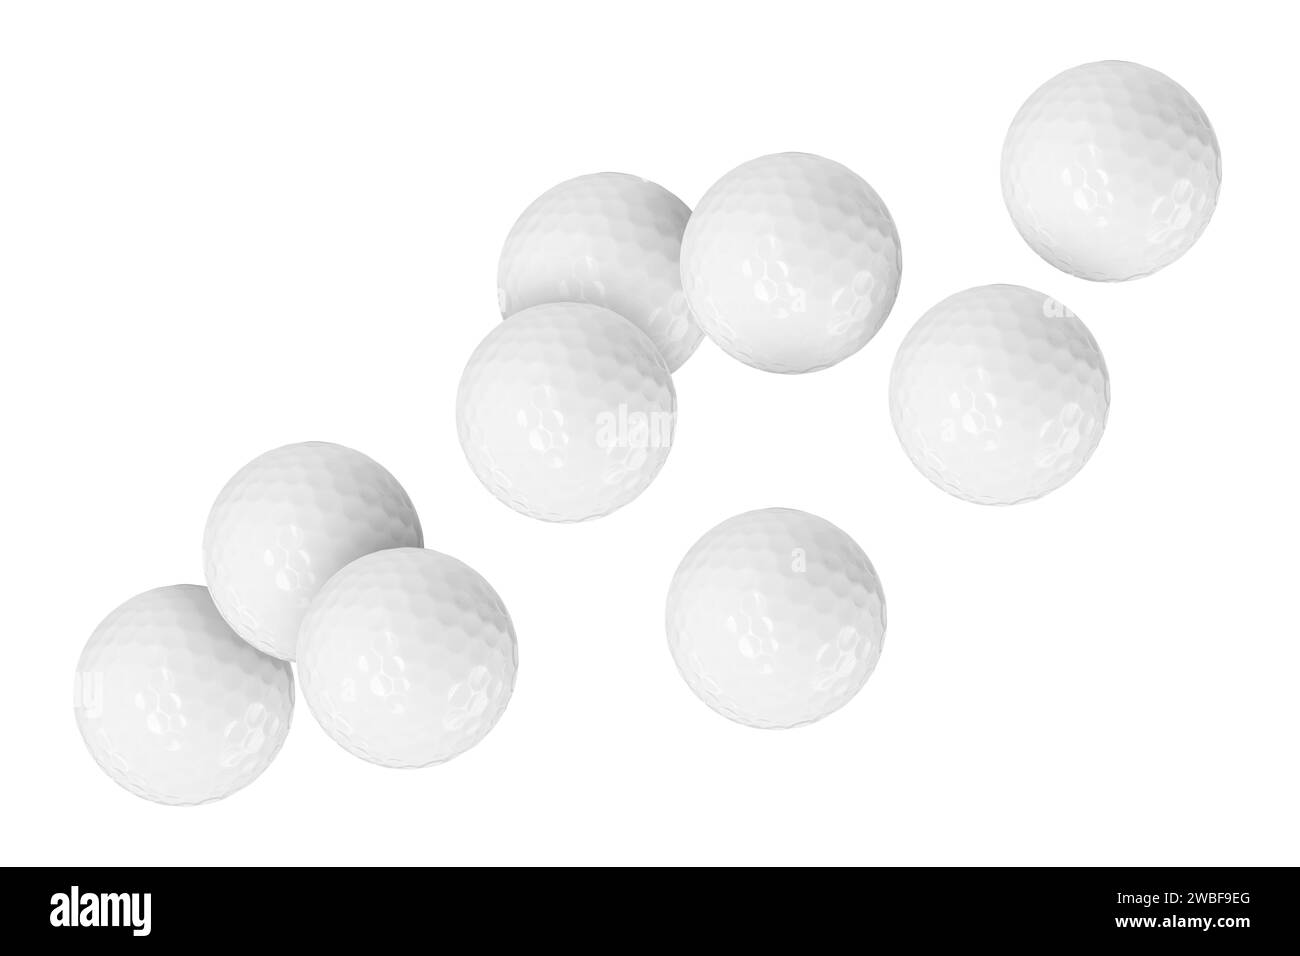 Many golf balls flying on white background Stock Photo